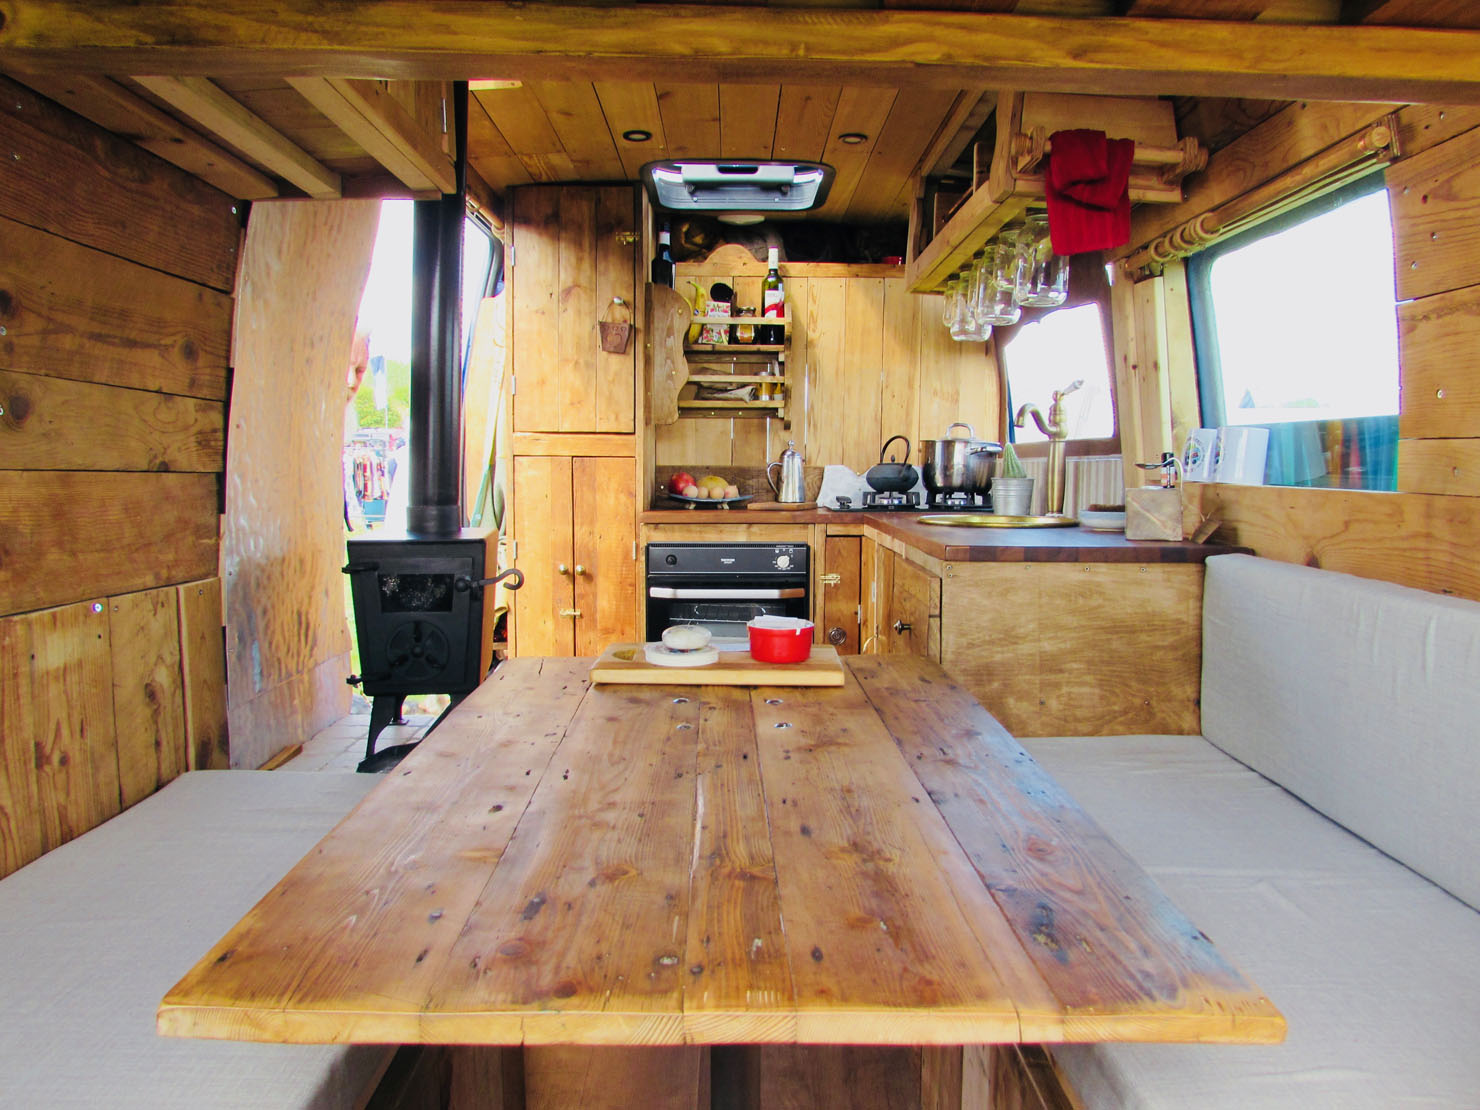 Wooden campervan interior with woodburner